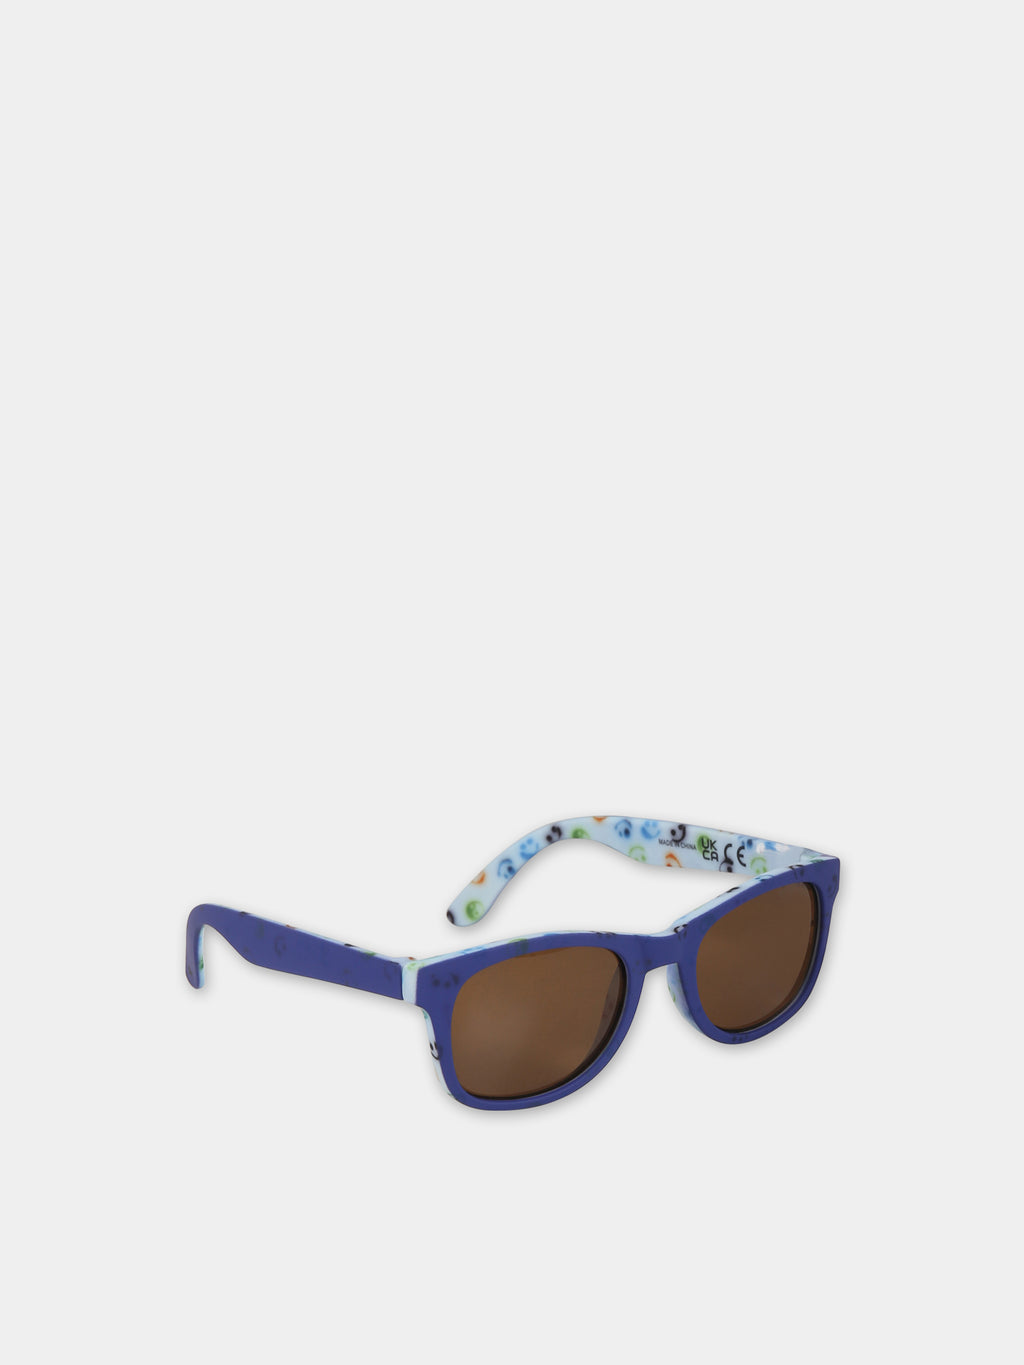 Blue Star sunglasses for boy